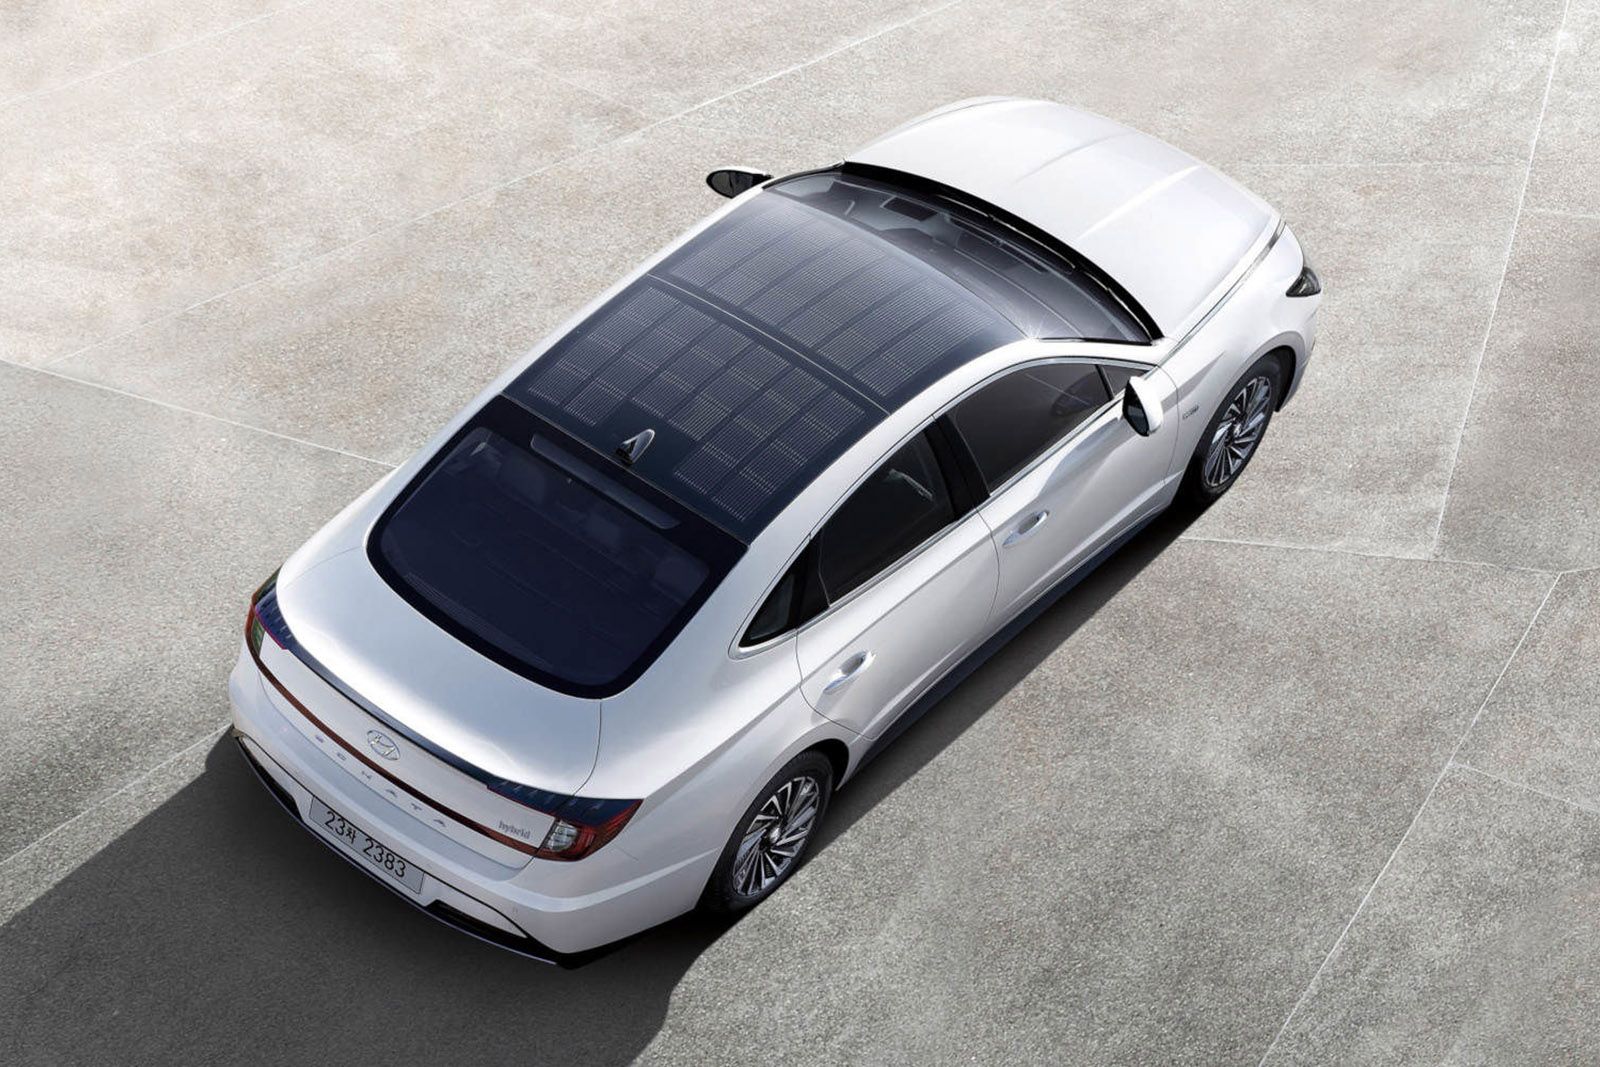 Hyundai New Sonata Hybrid with solar panel roof now on sale image 1